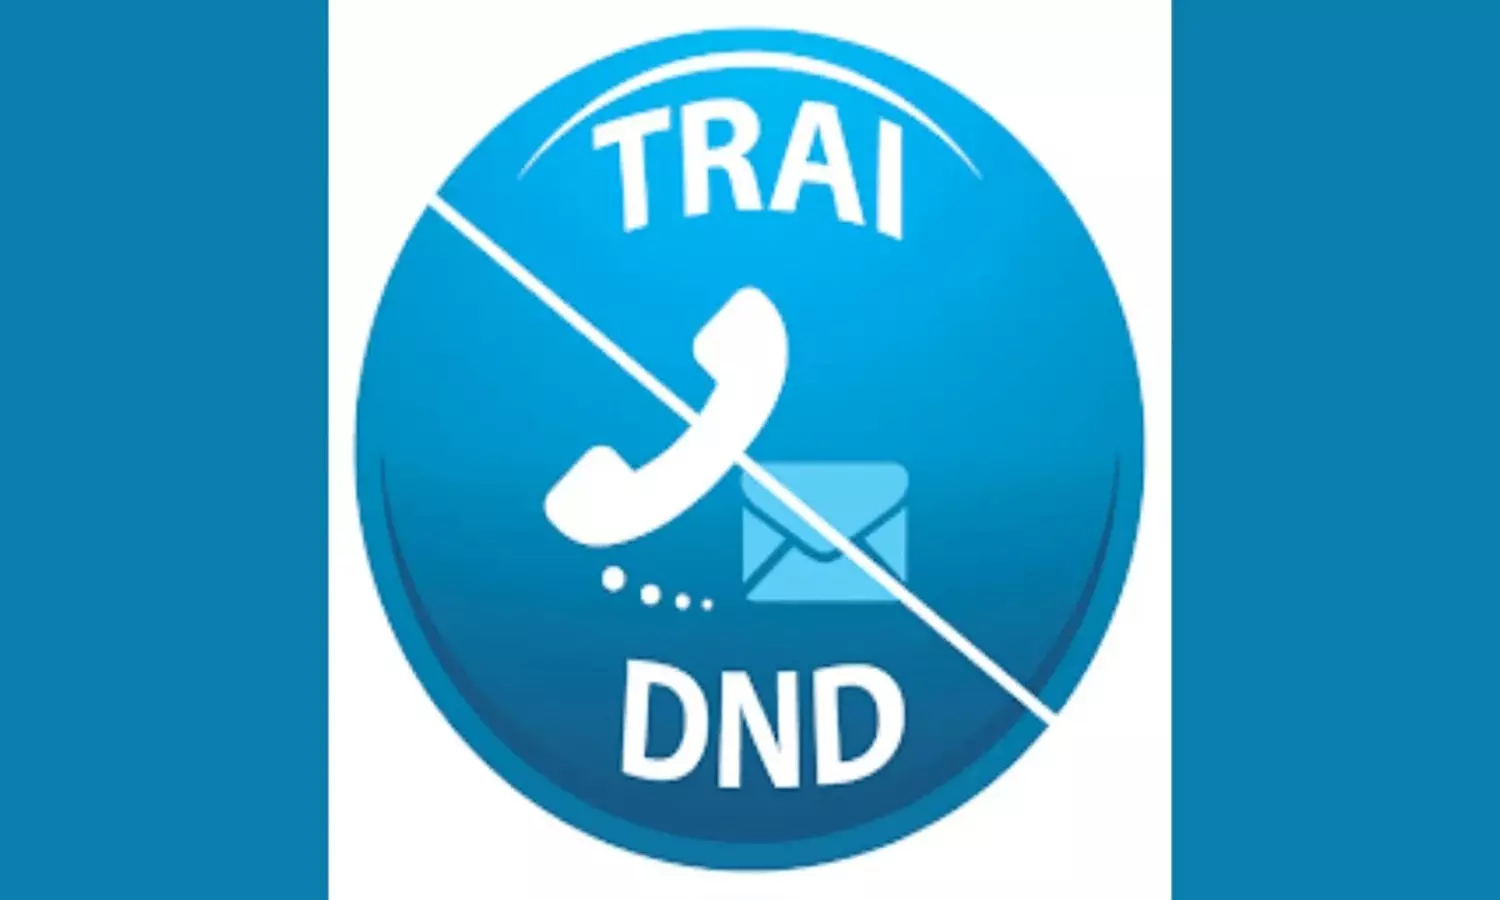 TRAI DND App